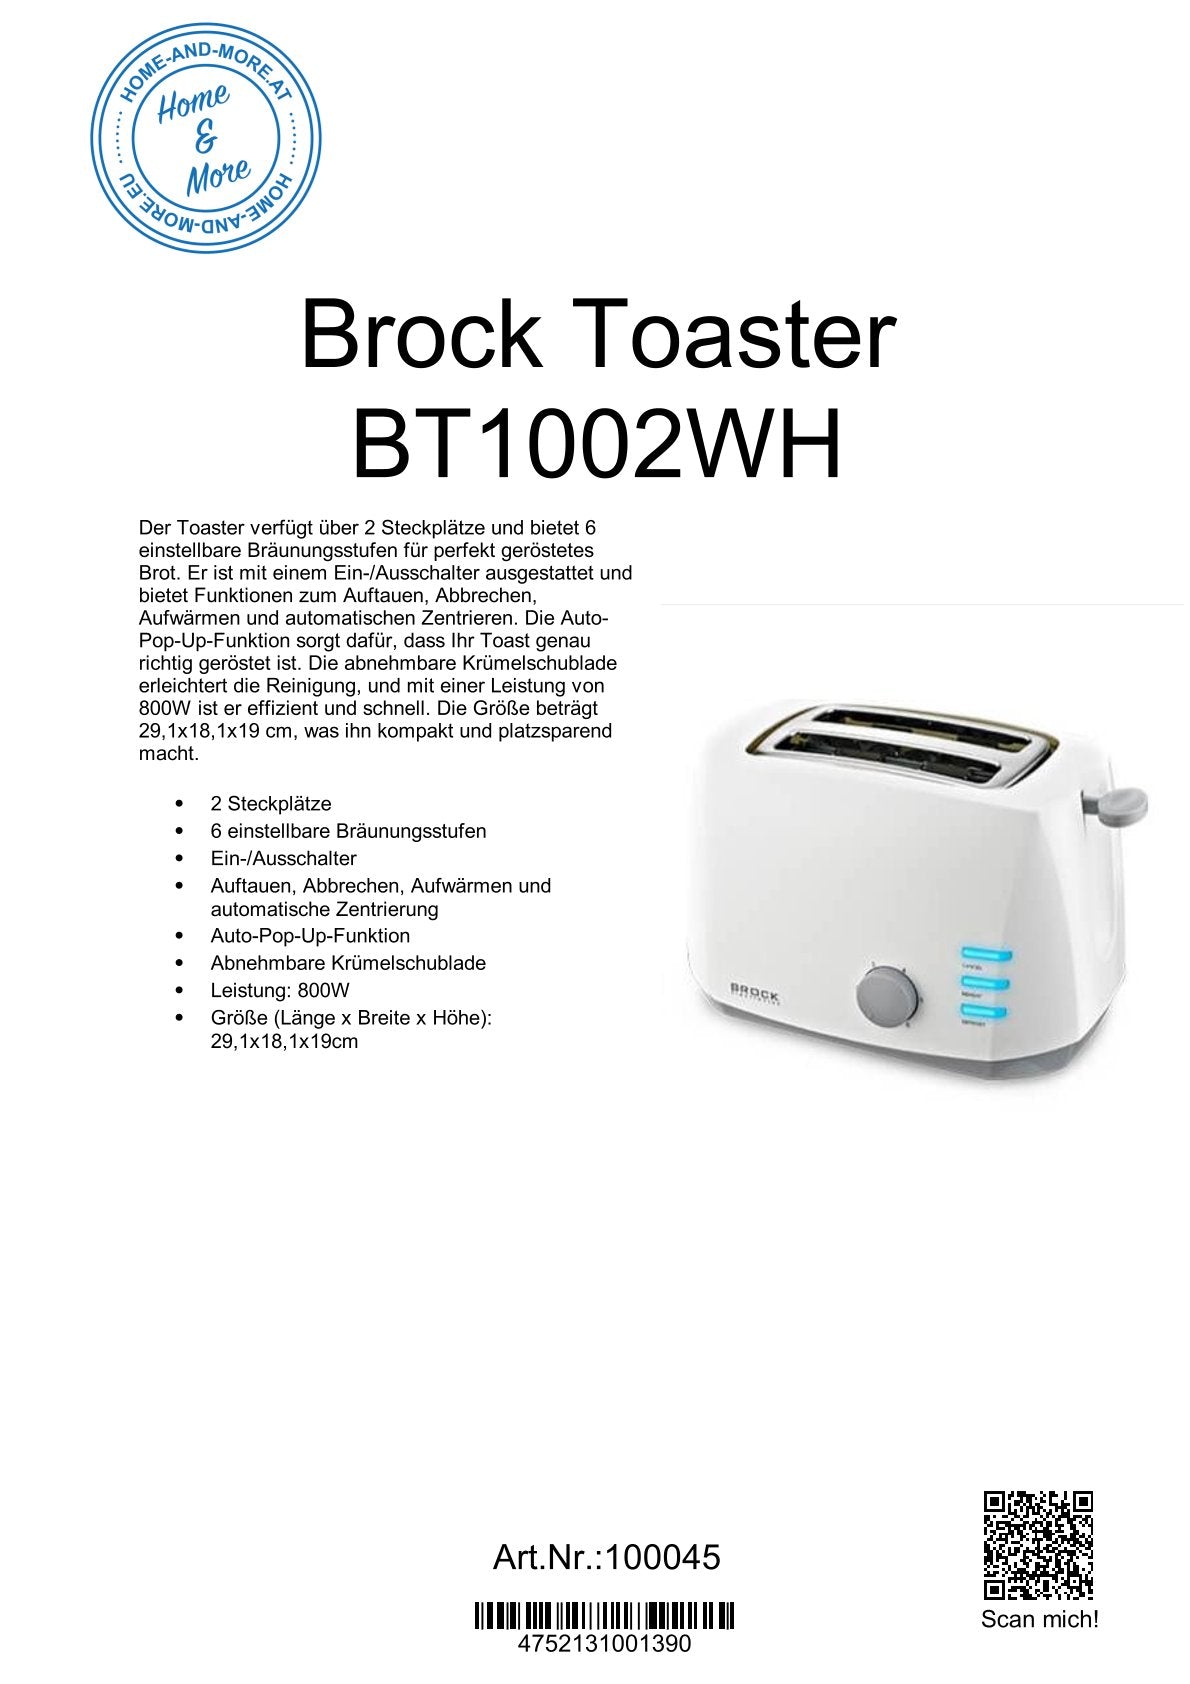 Brock Toaster BT1002WH